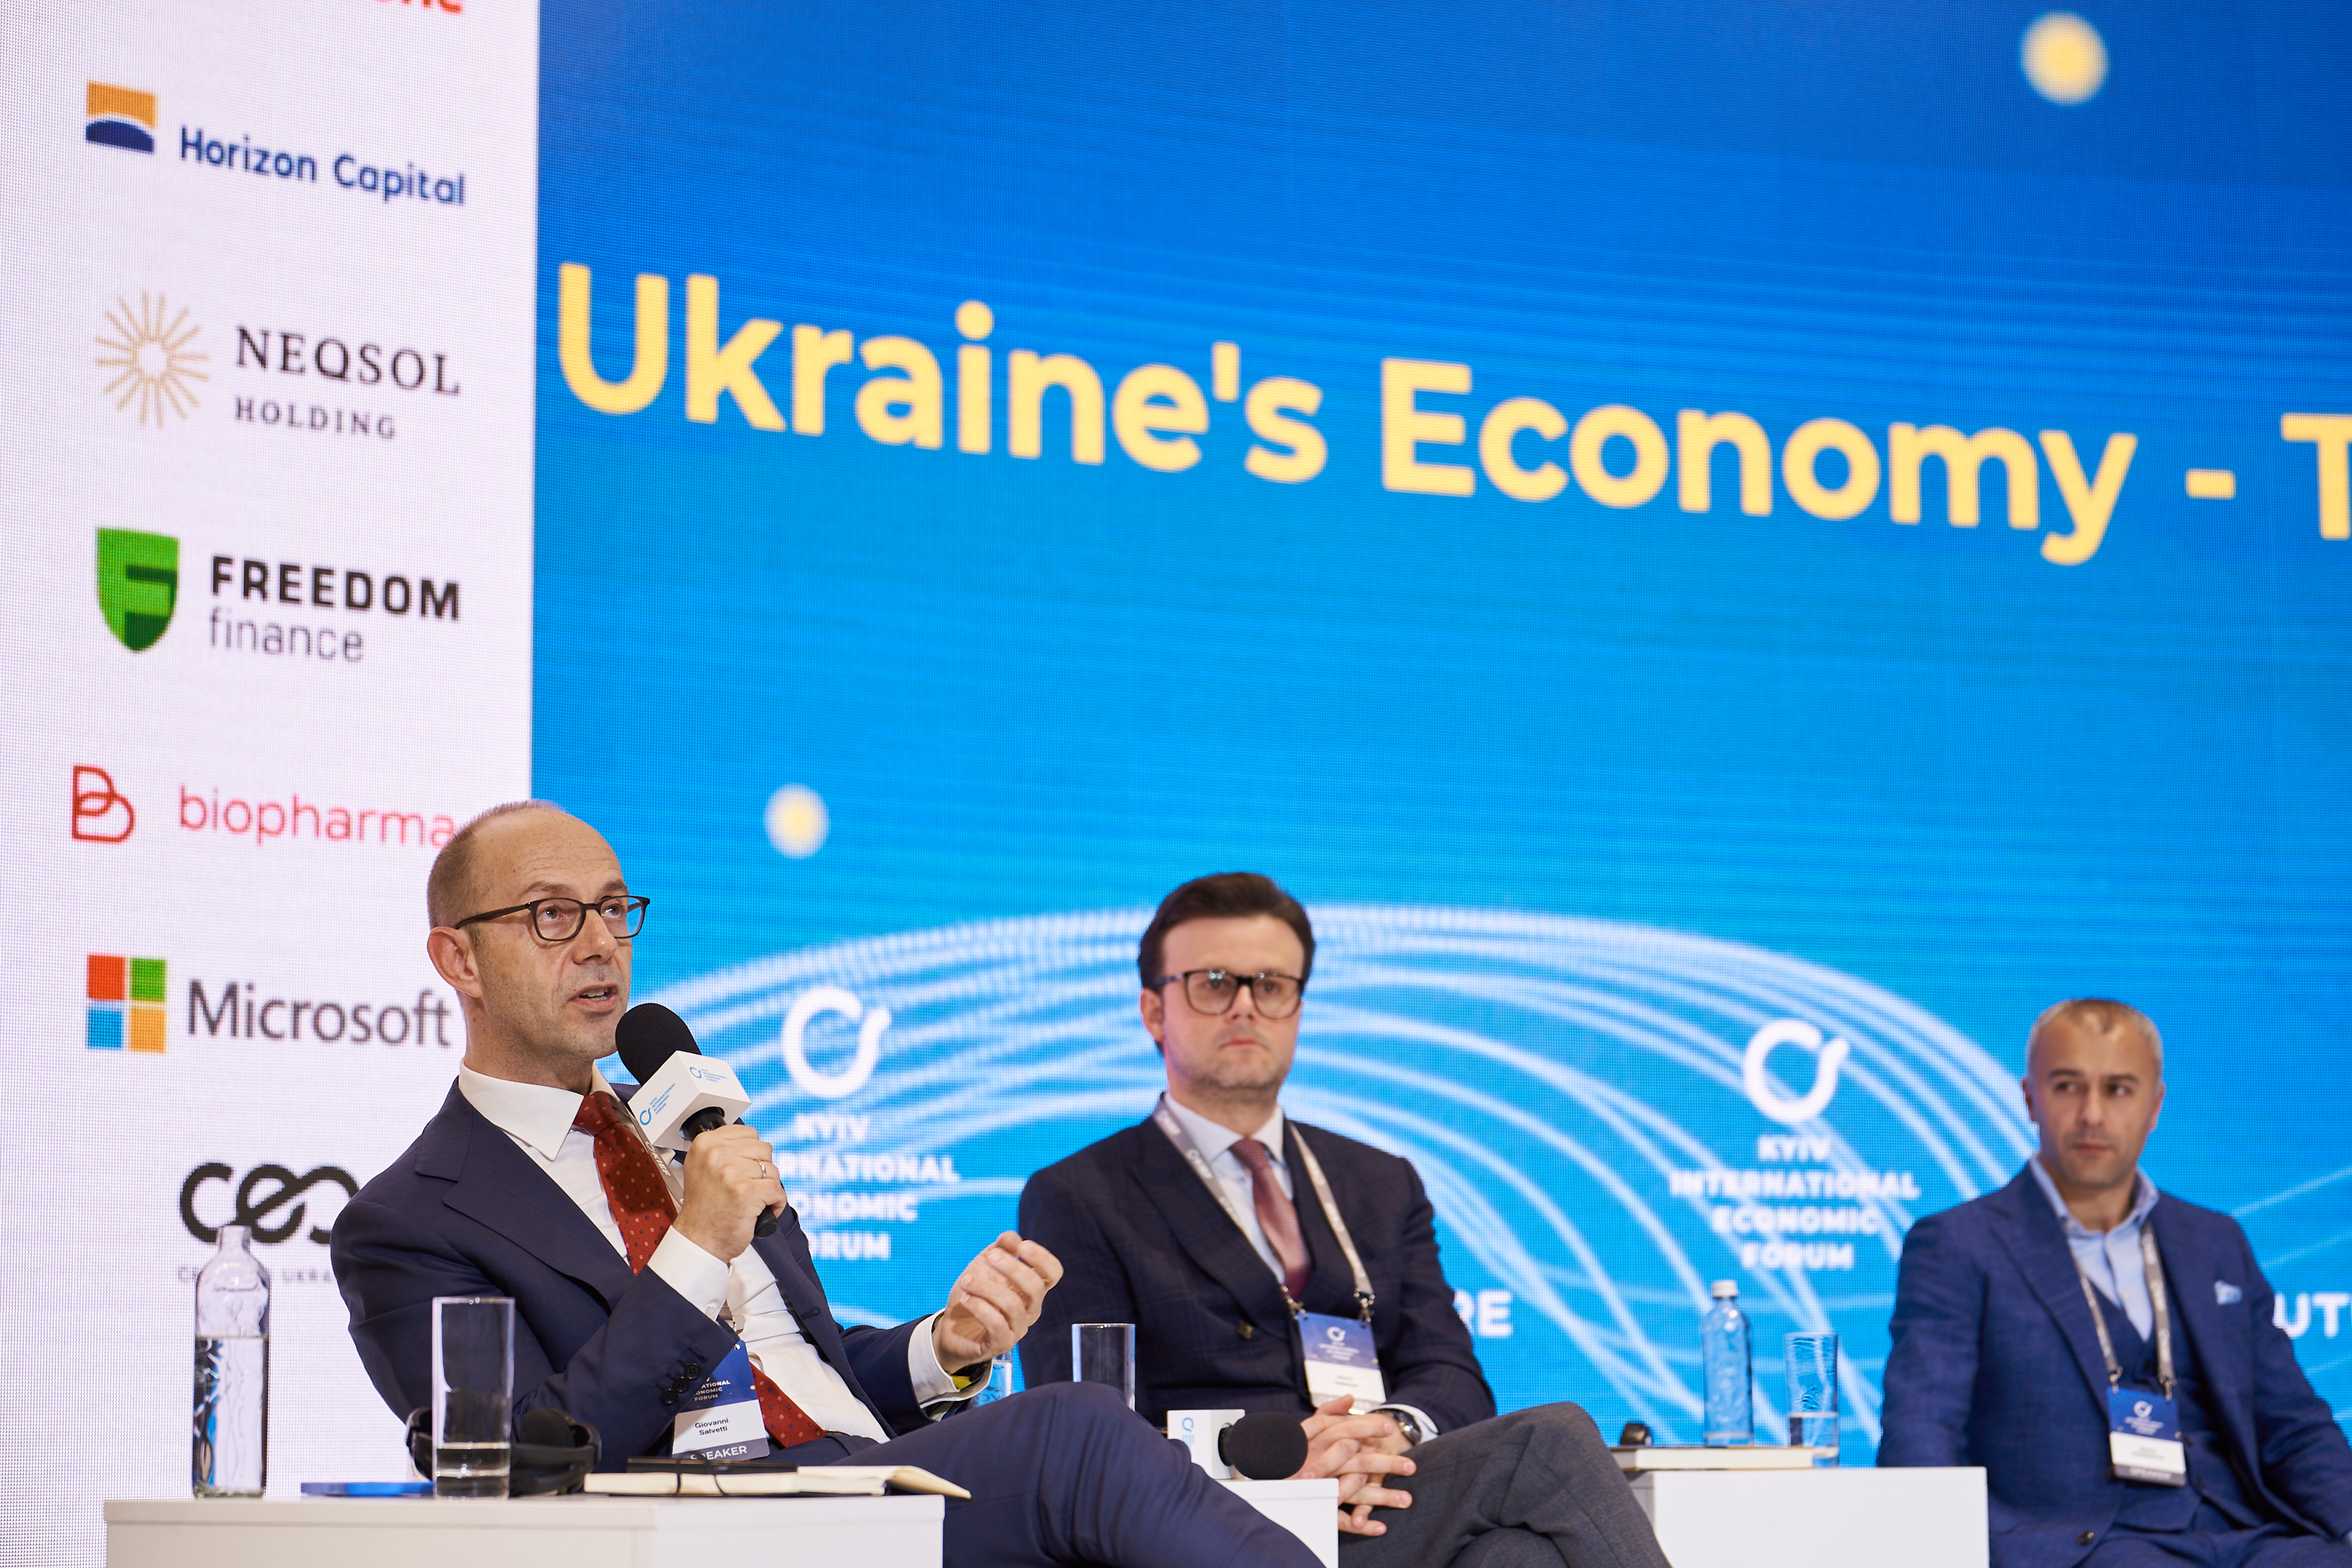 Ukraine's Economy - The Path to a Trillion KIEF 2021